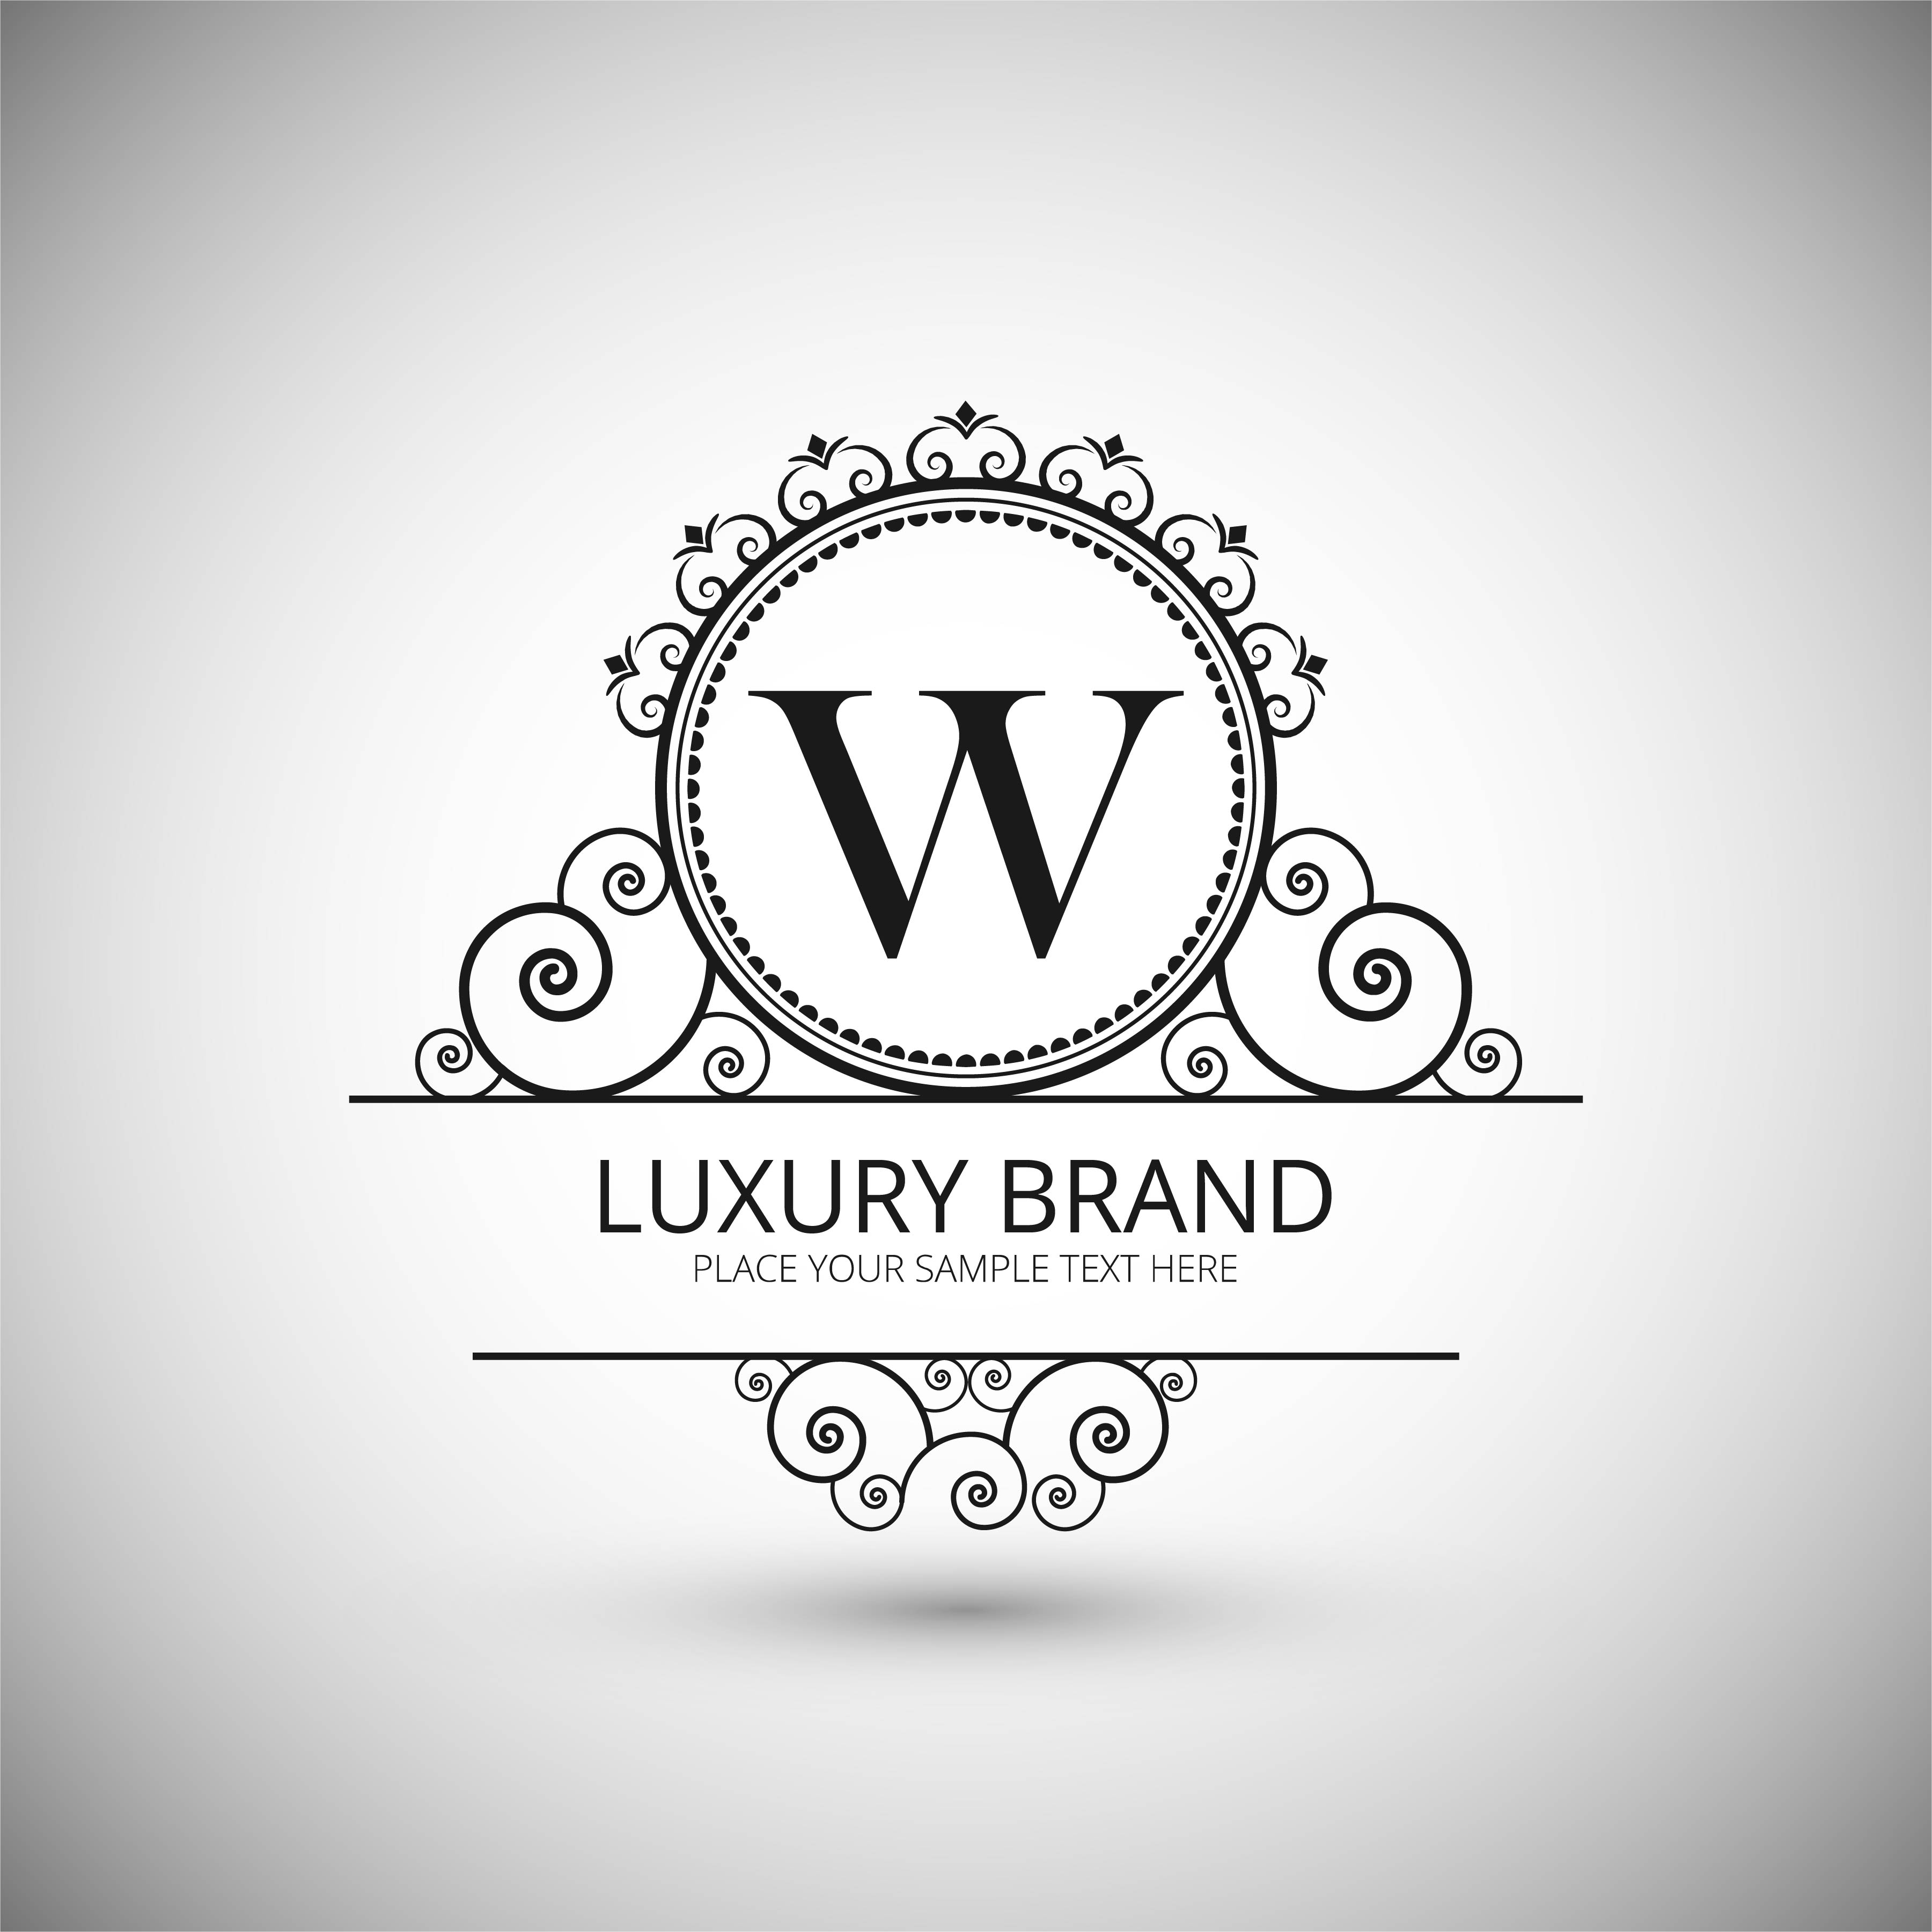 Modern luxury brand logo background vector 238803 Vector Art at Vecteezy